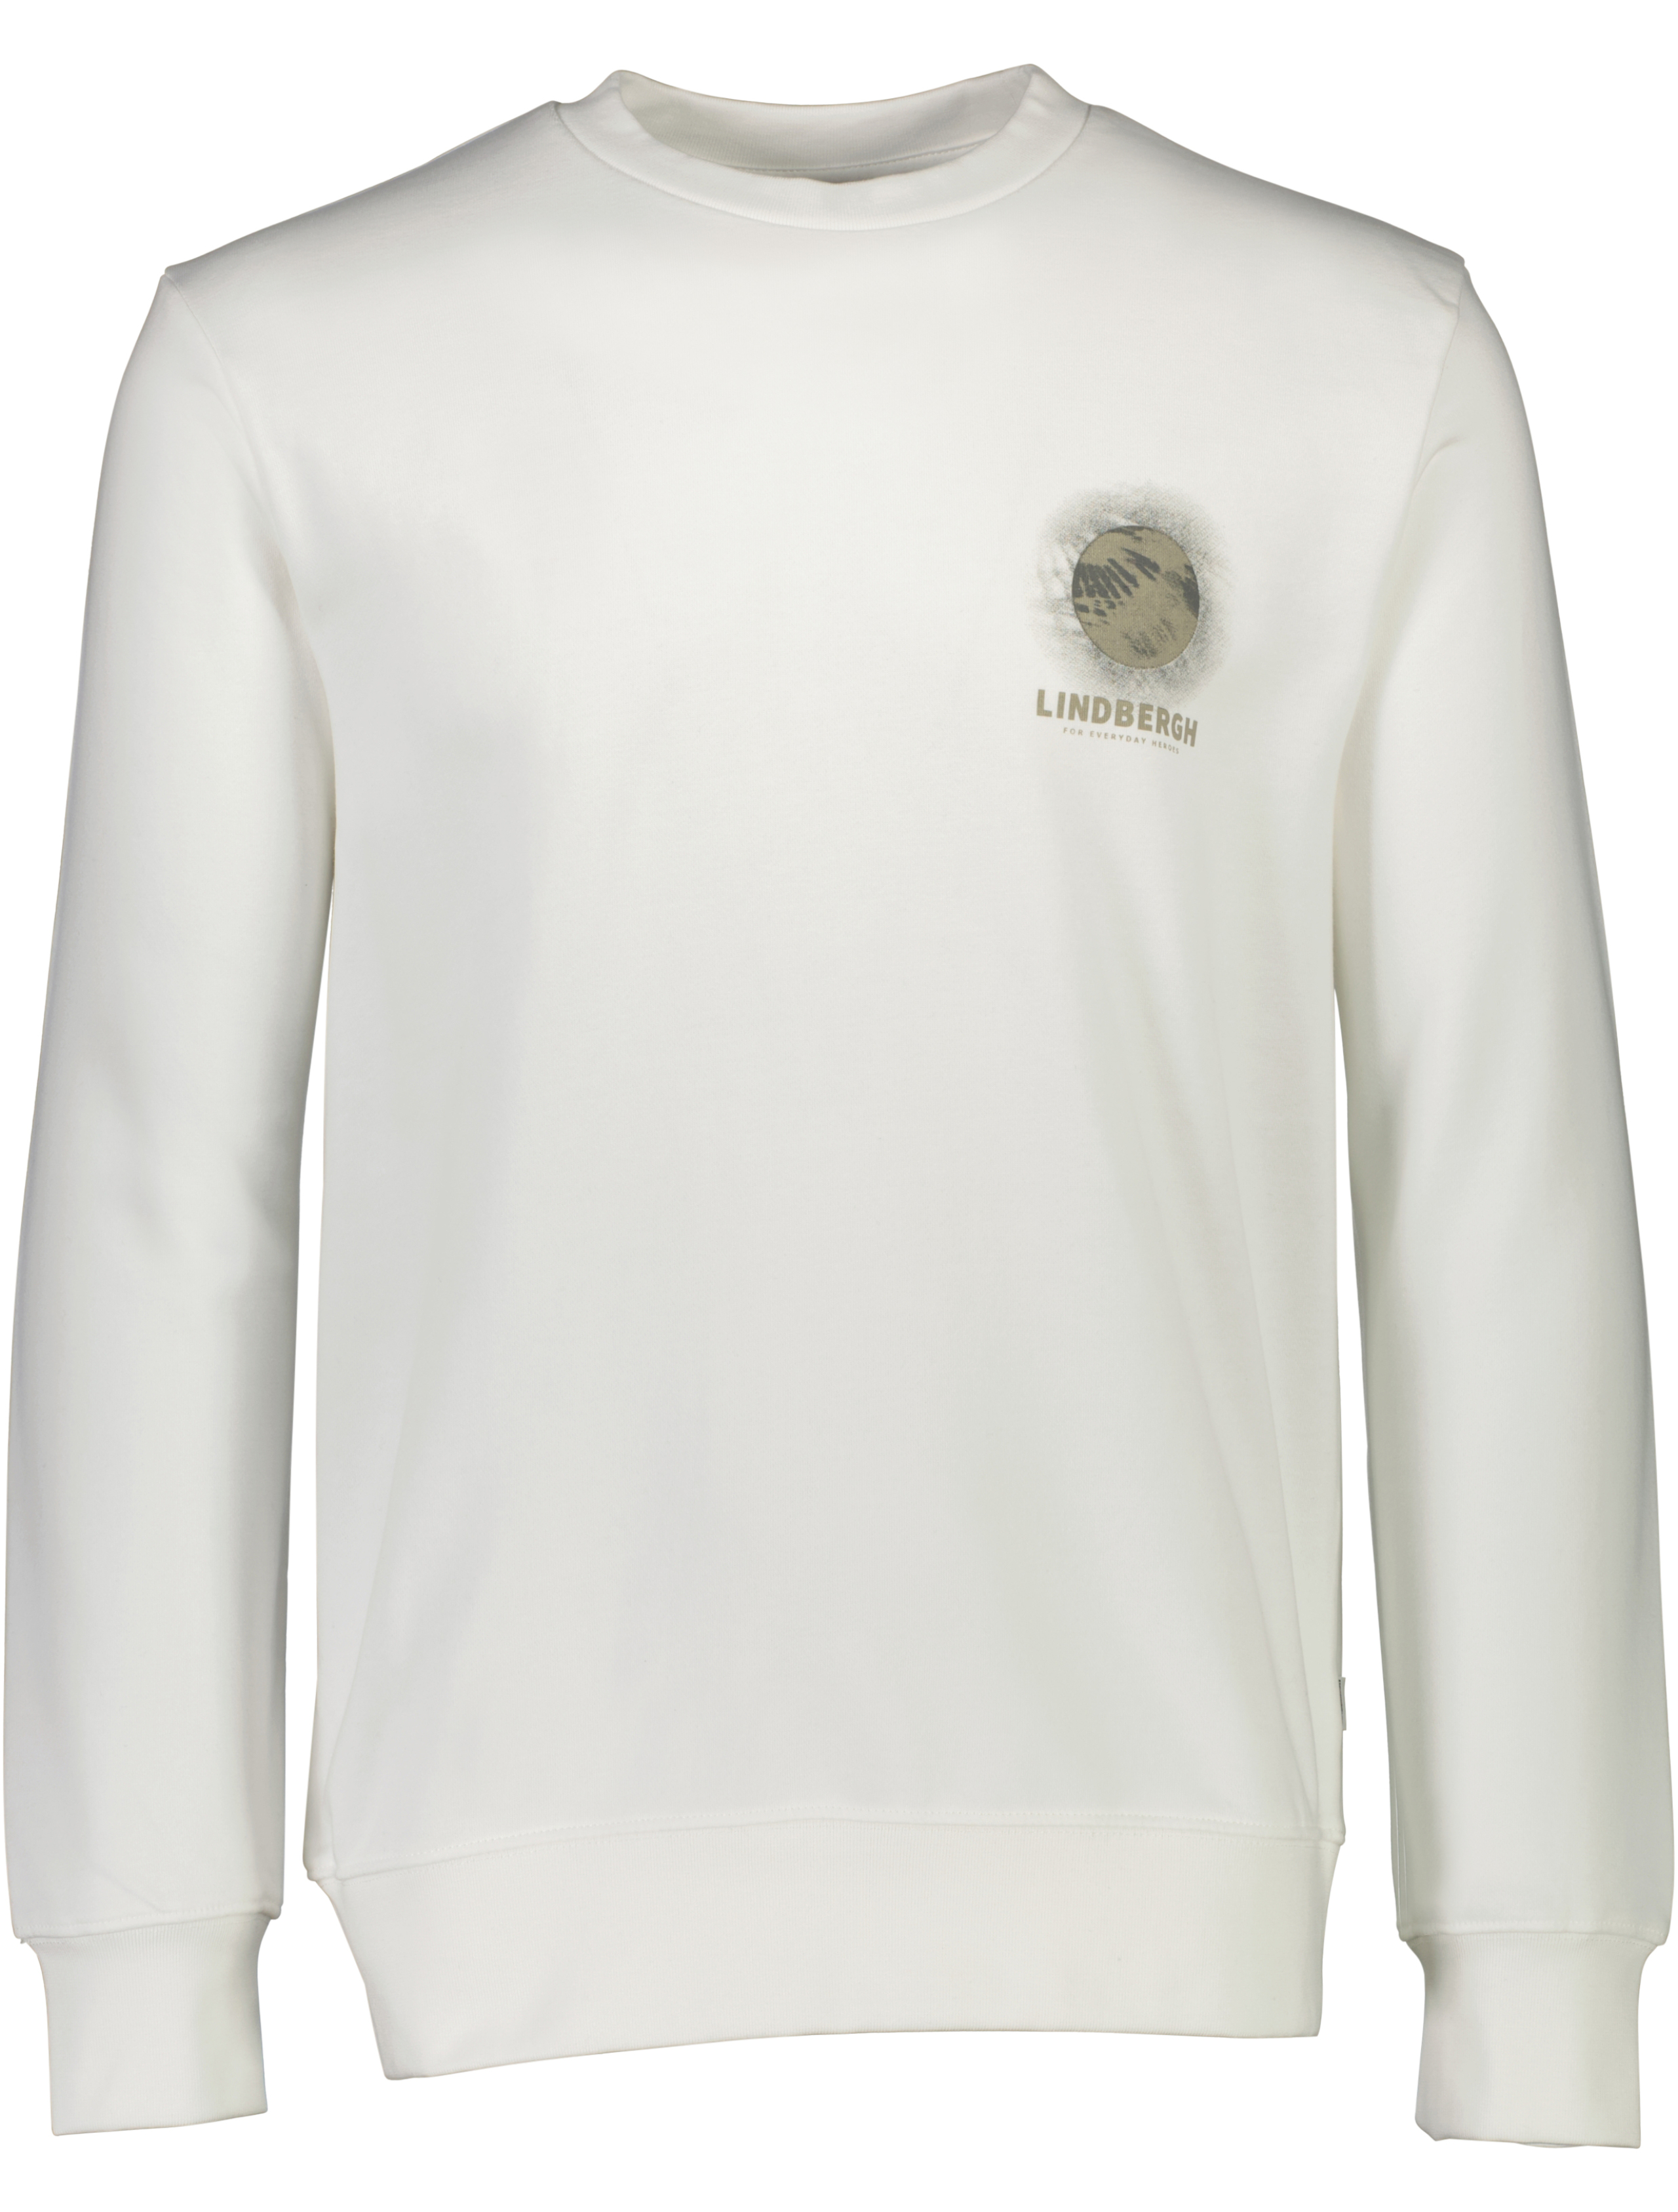 Lindbergh Sweatshirt white / off white